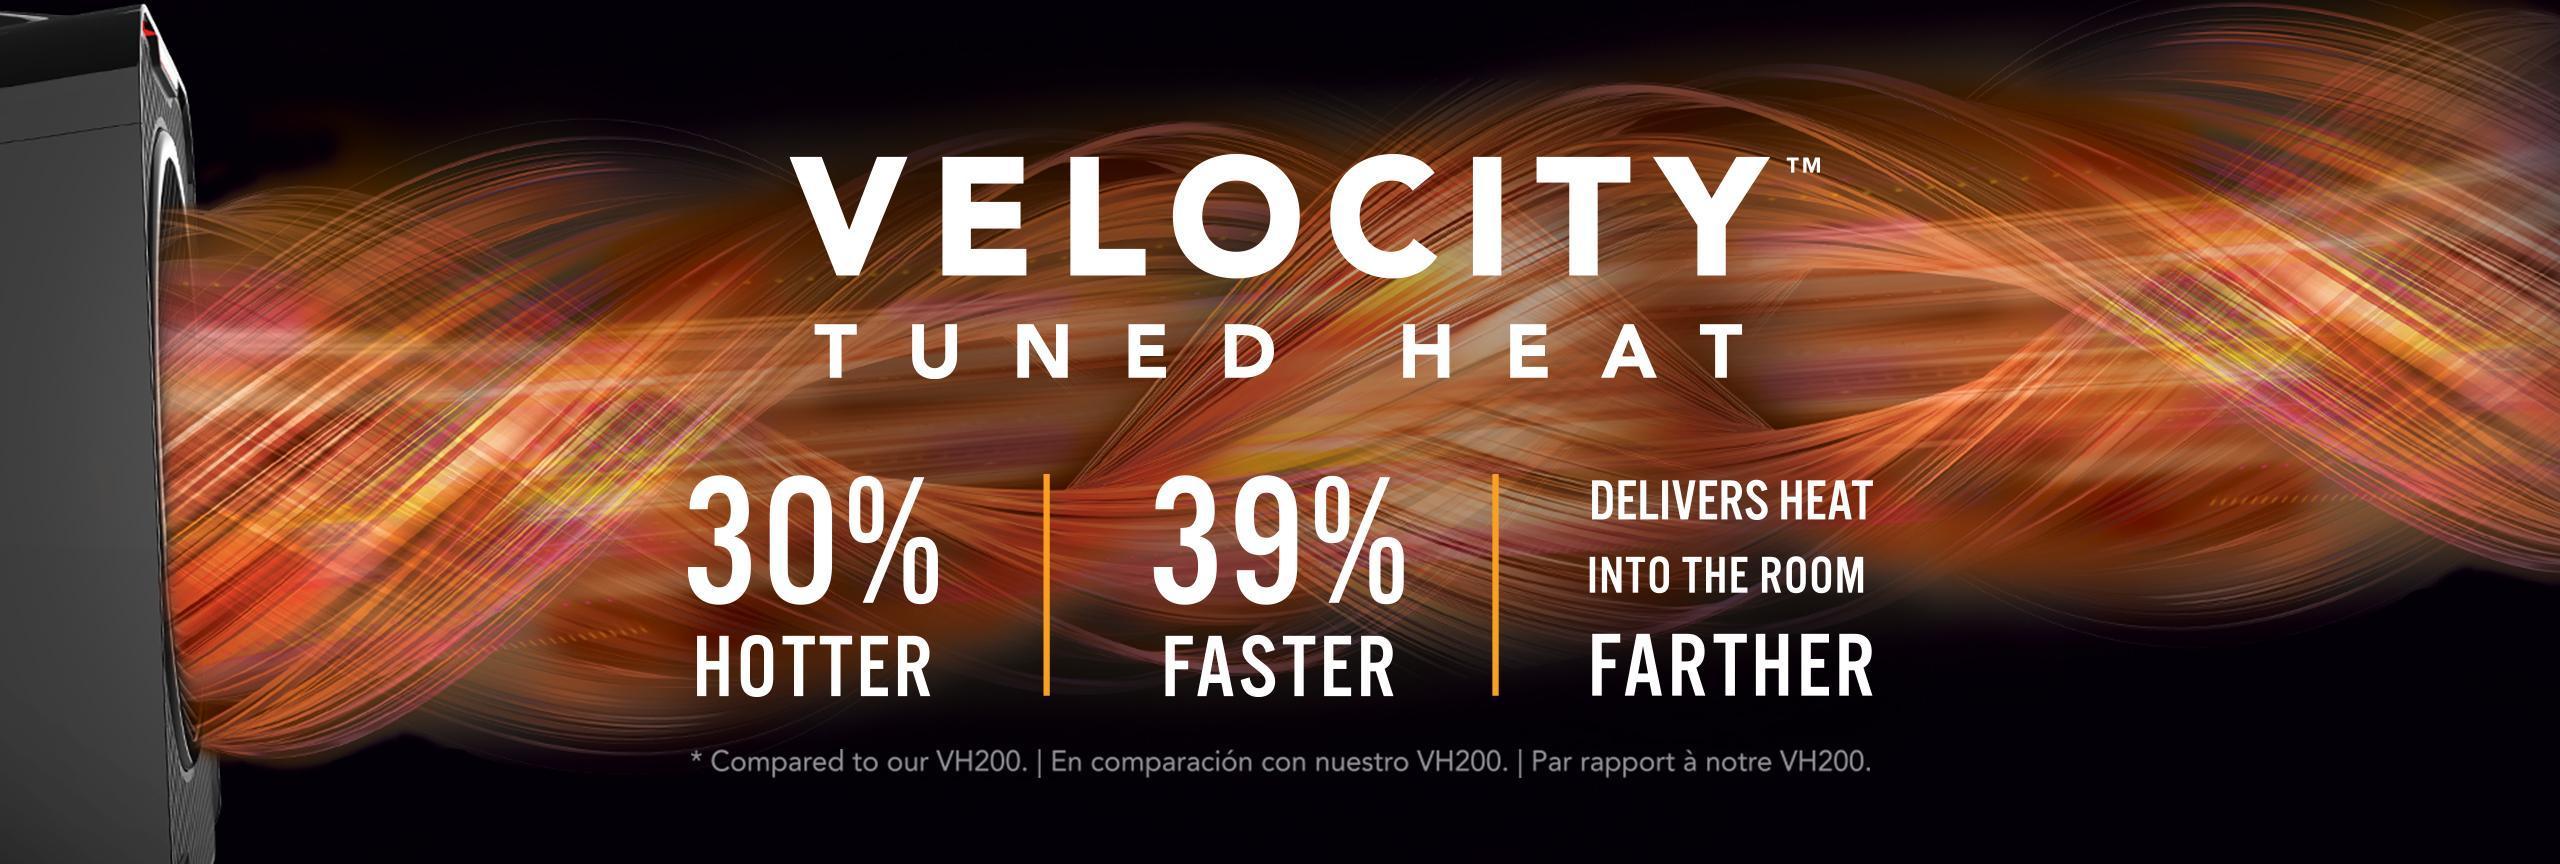 Velocity 5 Web Banner Velocity Tuned Heat